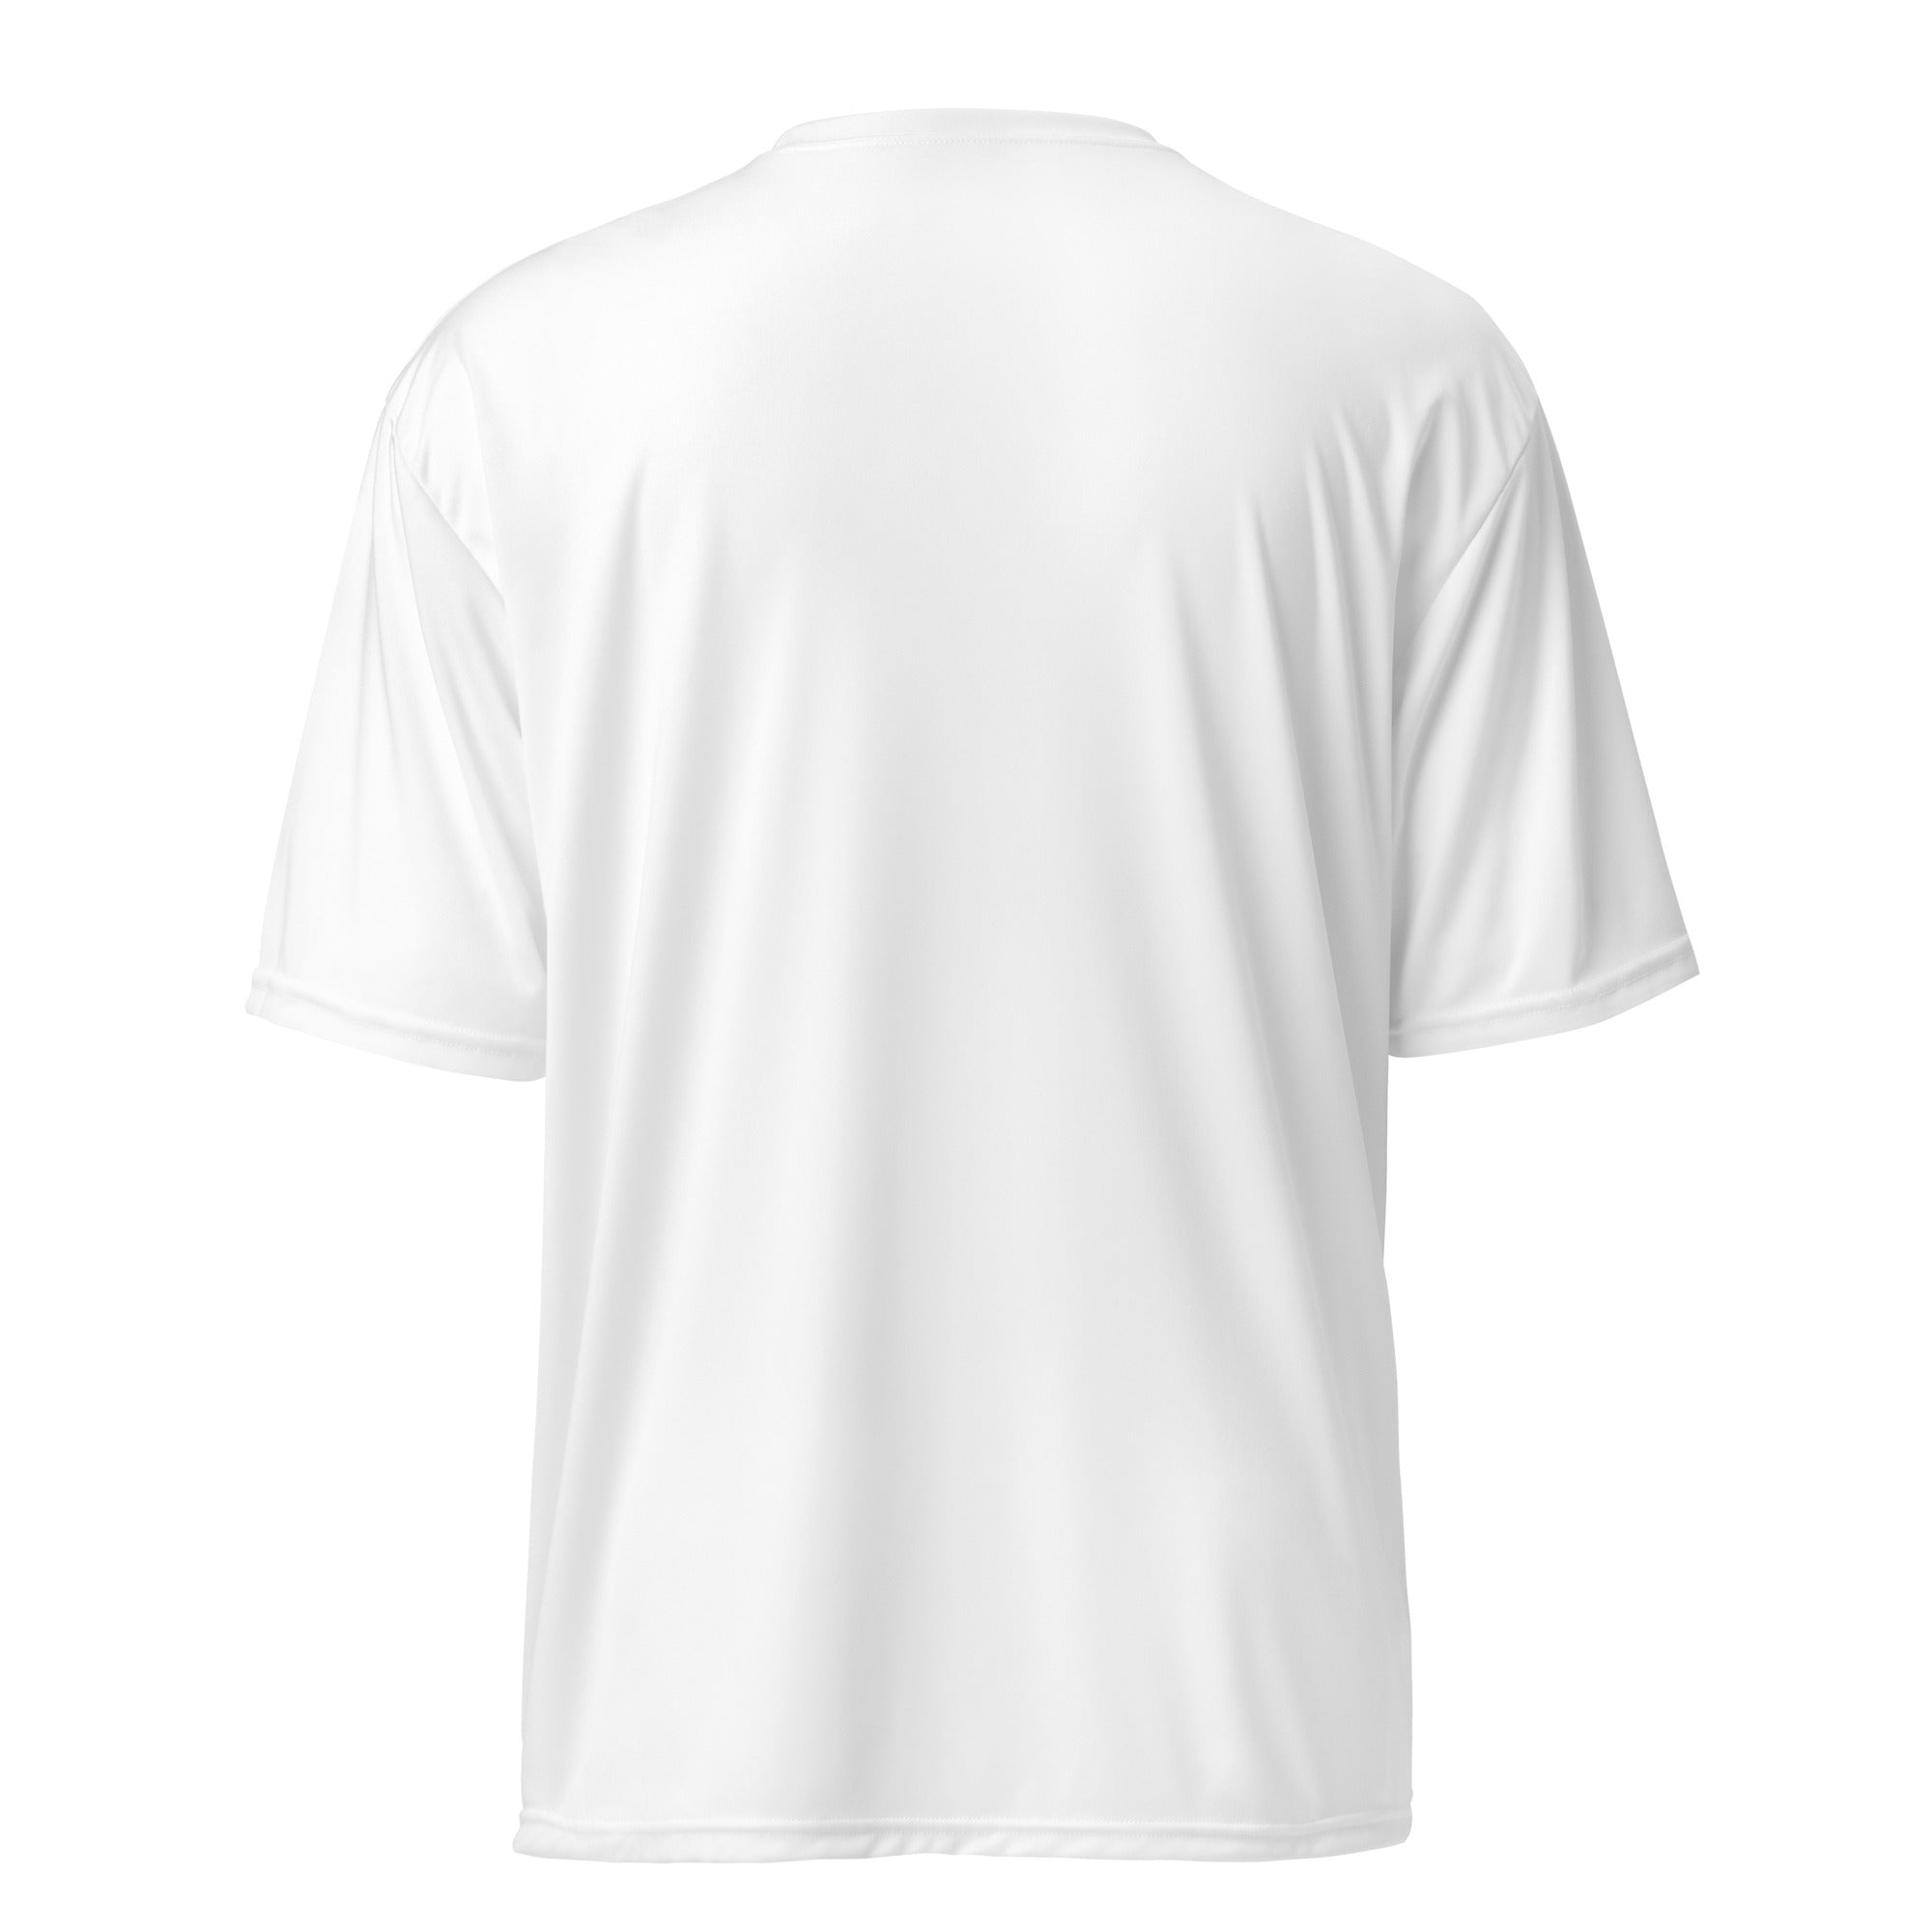 USF Unisex performance crew neck t-shirt